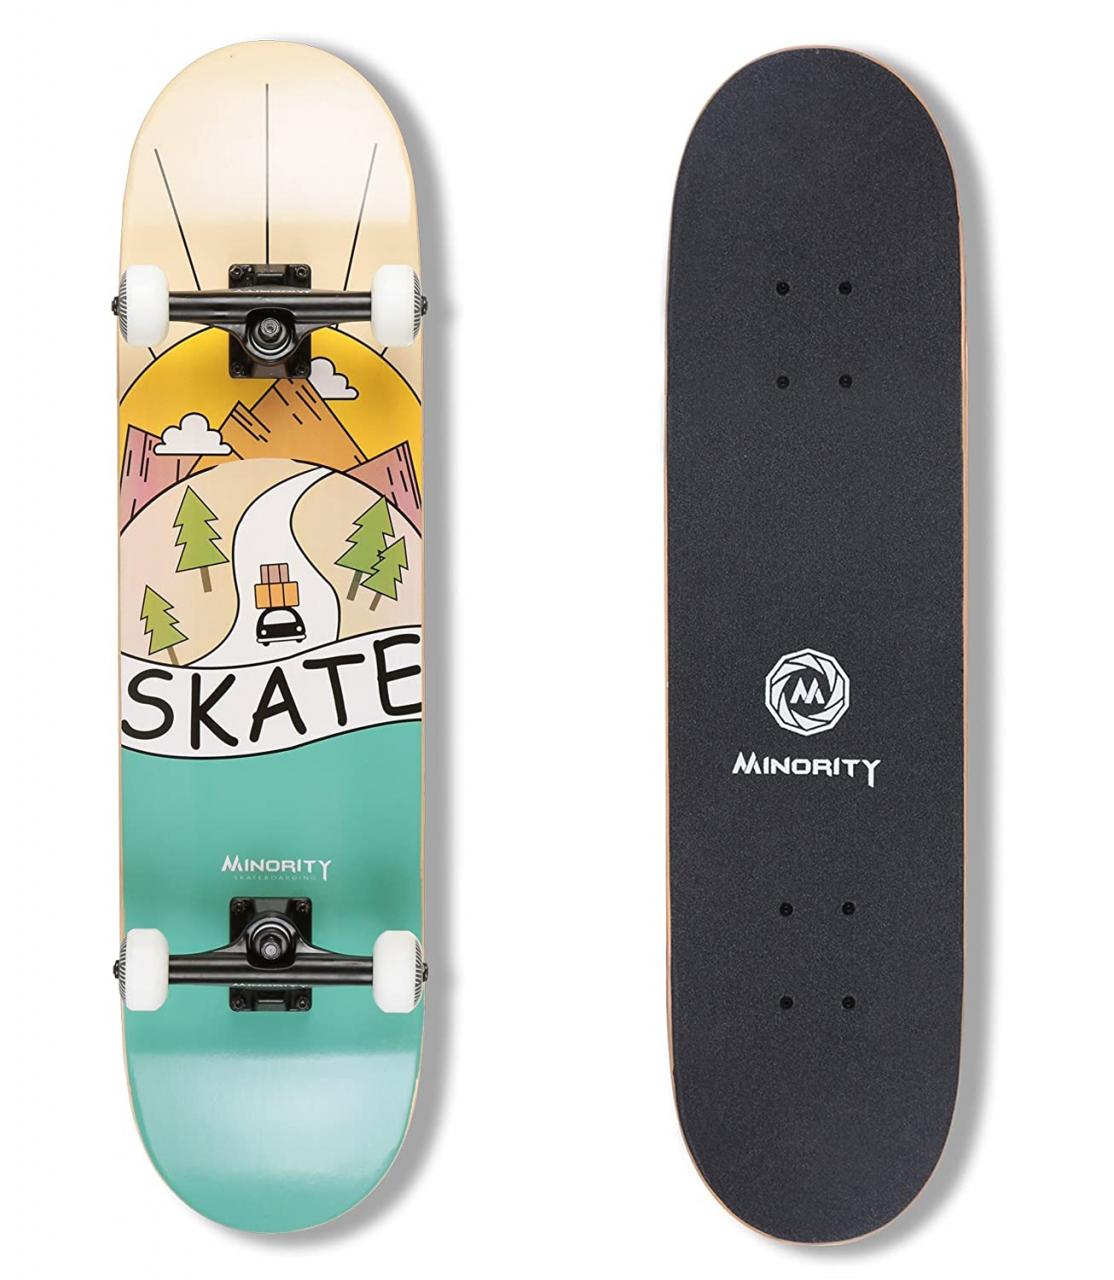 MINORITY 32inch Maple Skateboard Standard Skateboards Toys & Games ekoios.vn